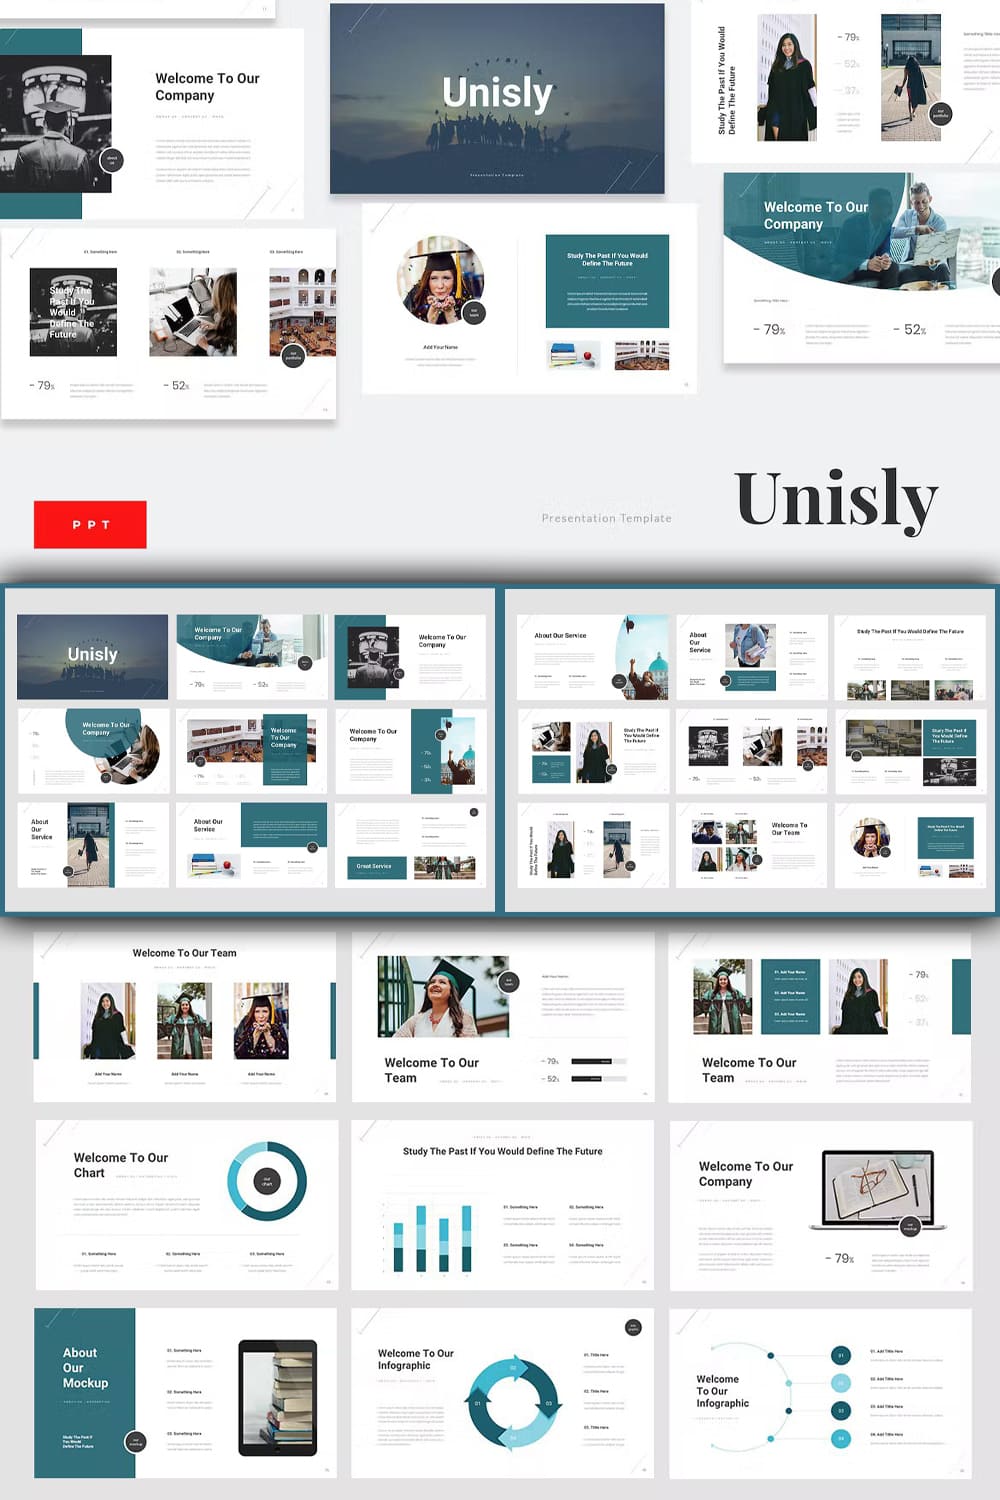 Unisly - University Education PowerPoint Template - Pinterest.